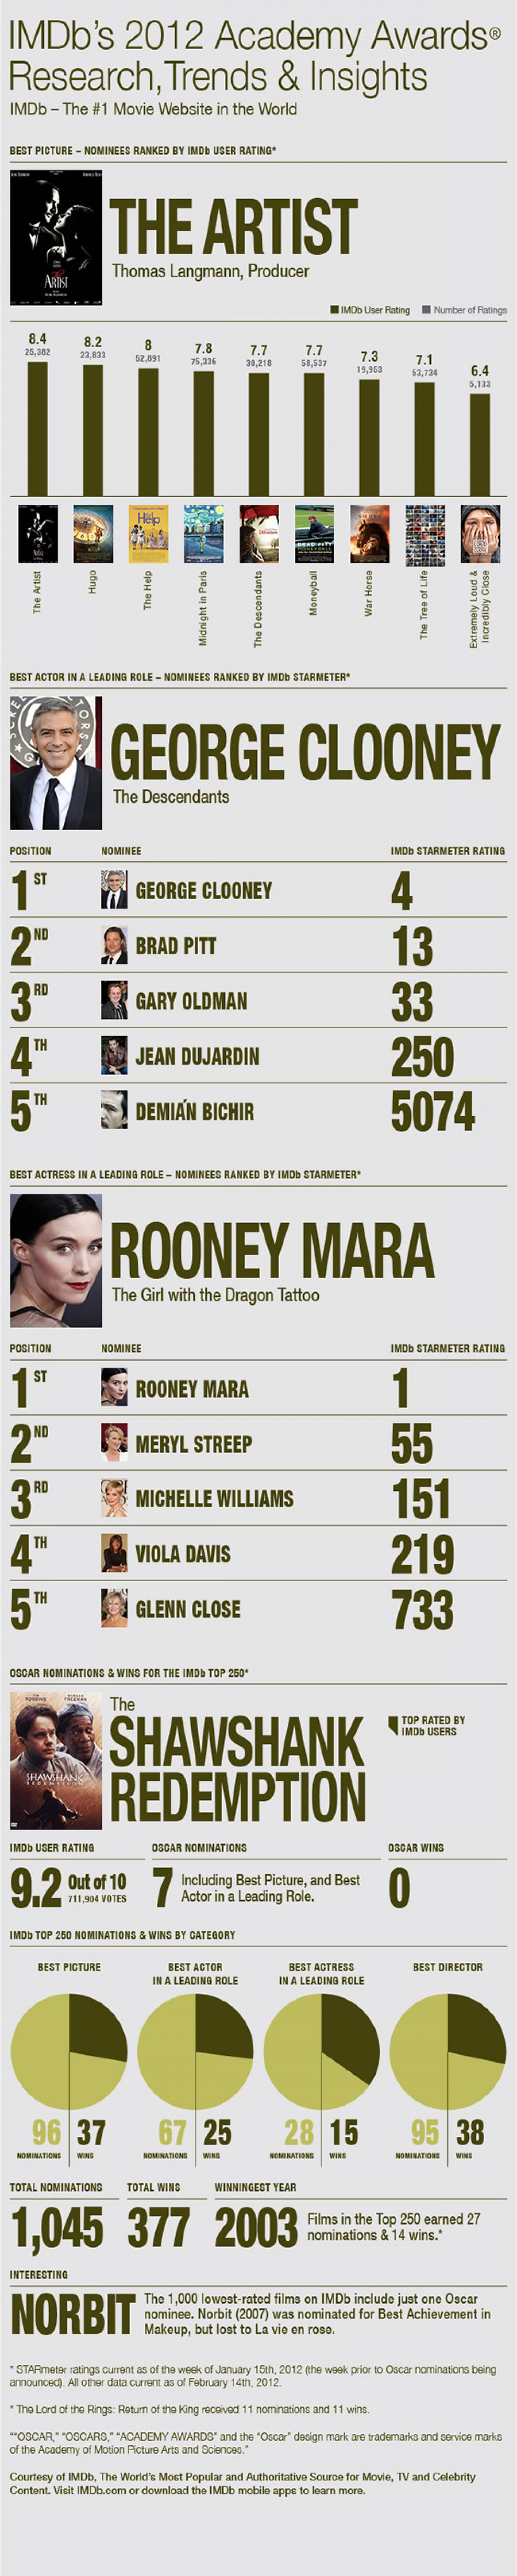 IMDb's 2012 Academy Awards Infographic